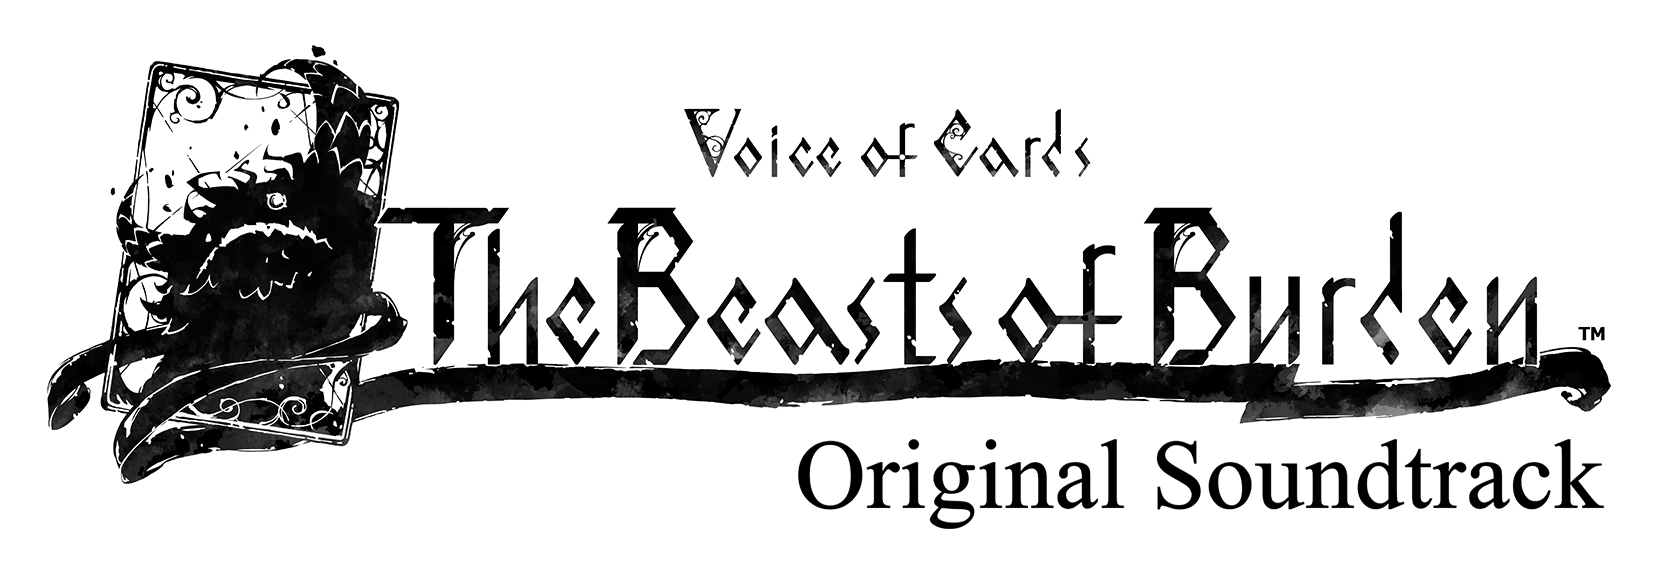 Voice of Cards: The Beasts of Burden Original Soundtrack